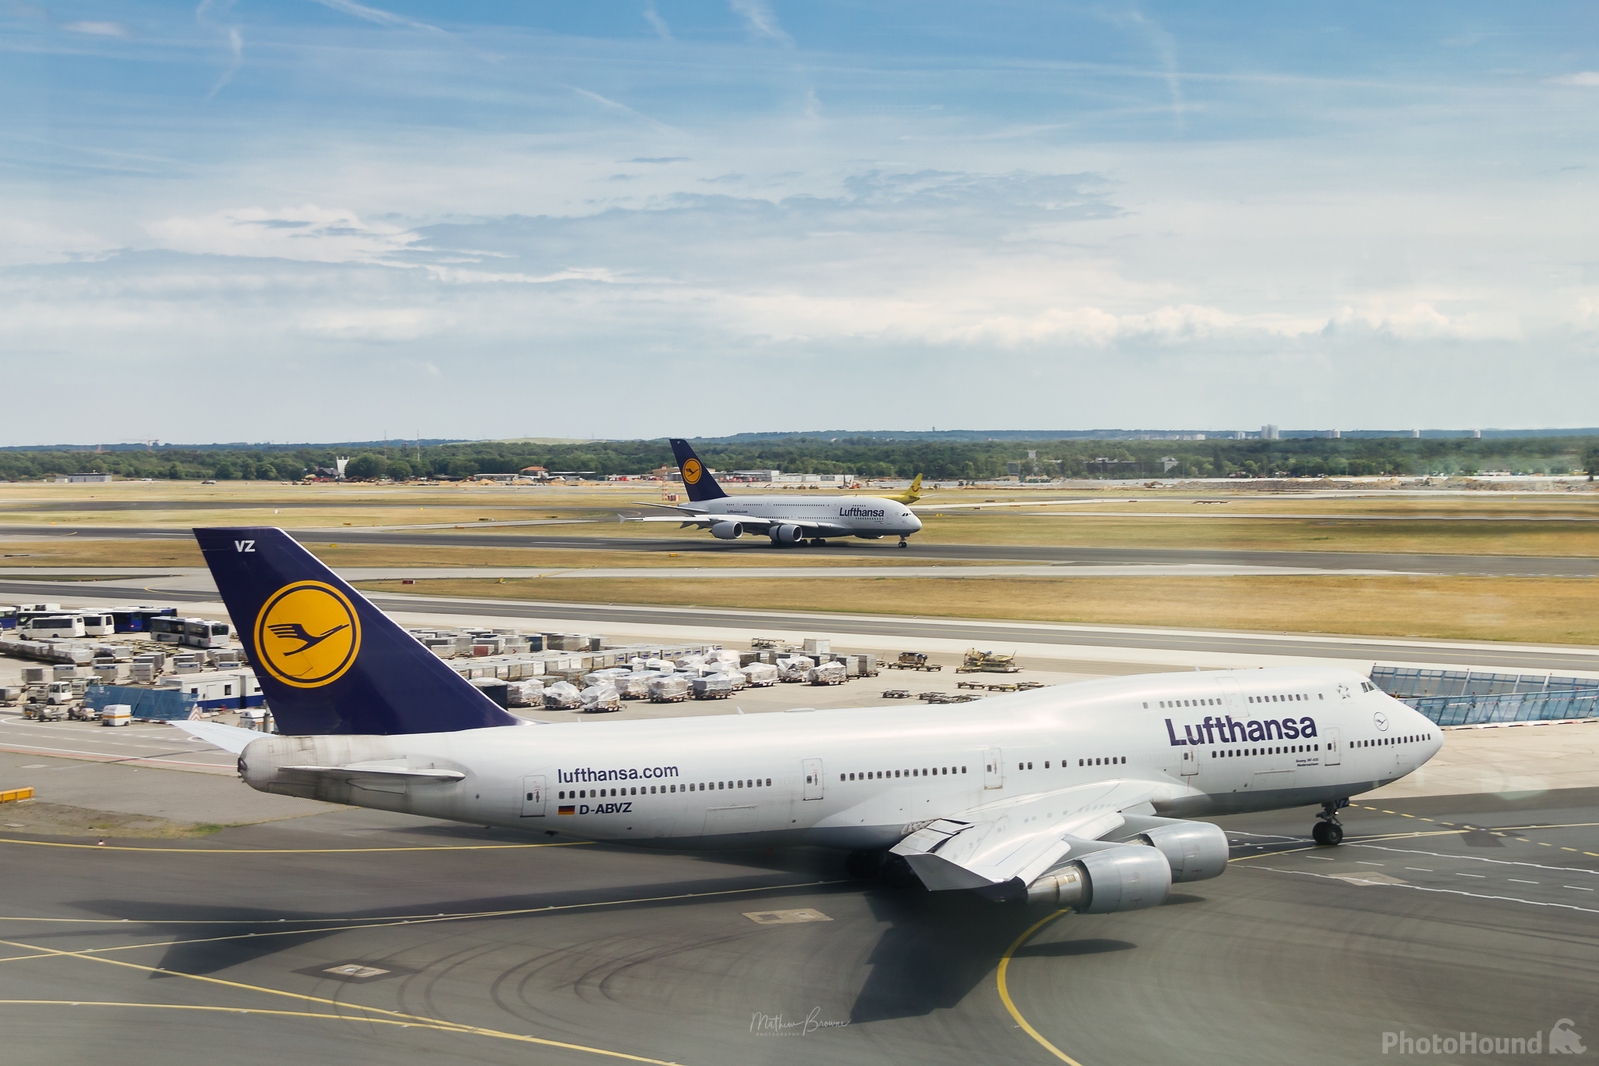 Image of Frankfurt Airport by Mathew Browne